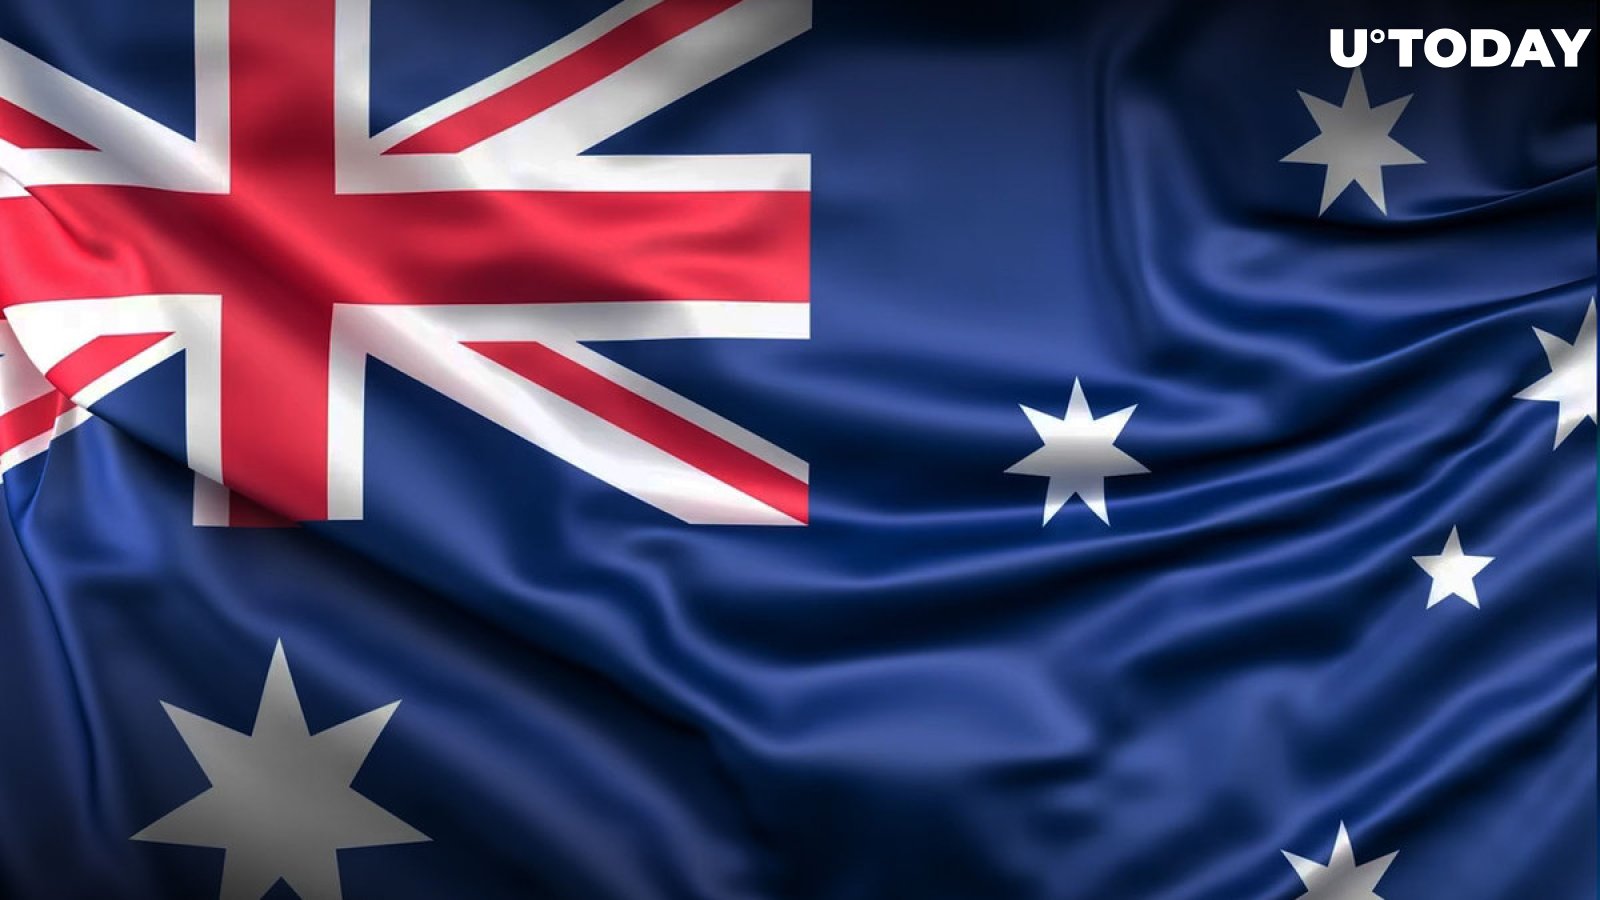 Australians Receive Major Crypto Warning from Top Regulator